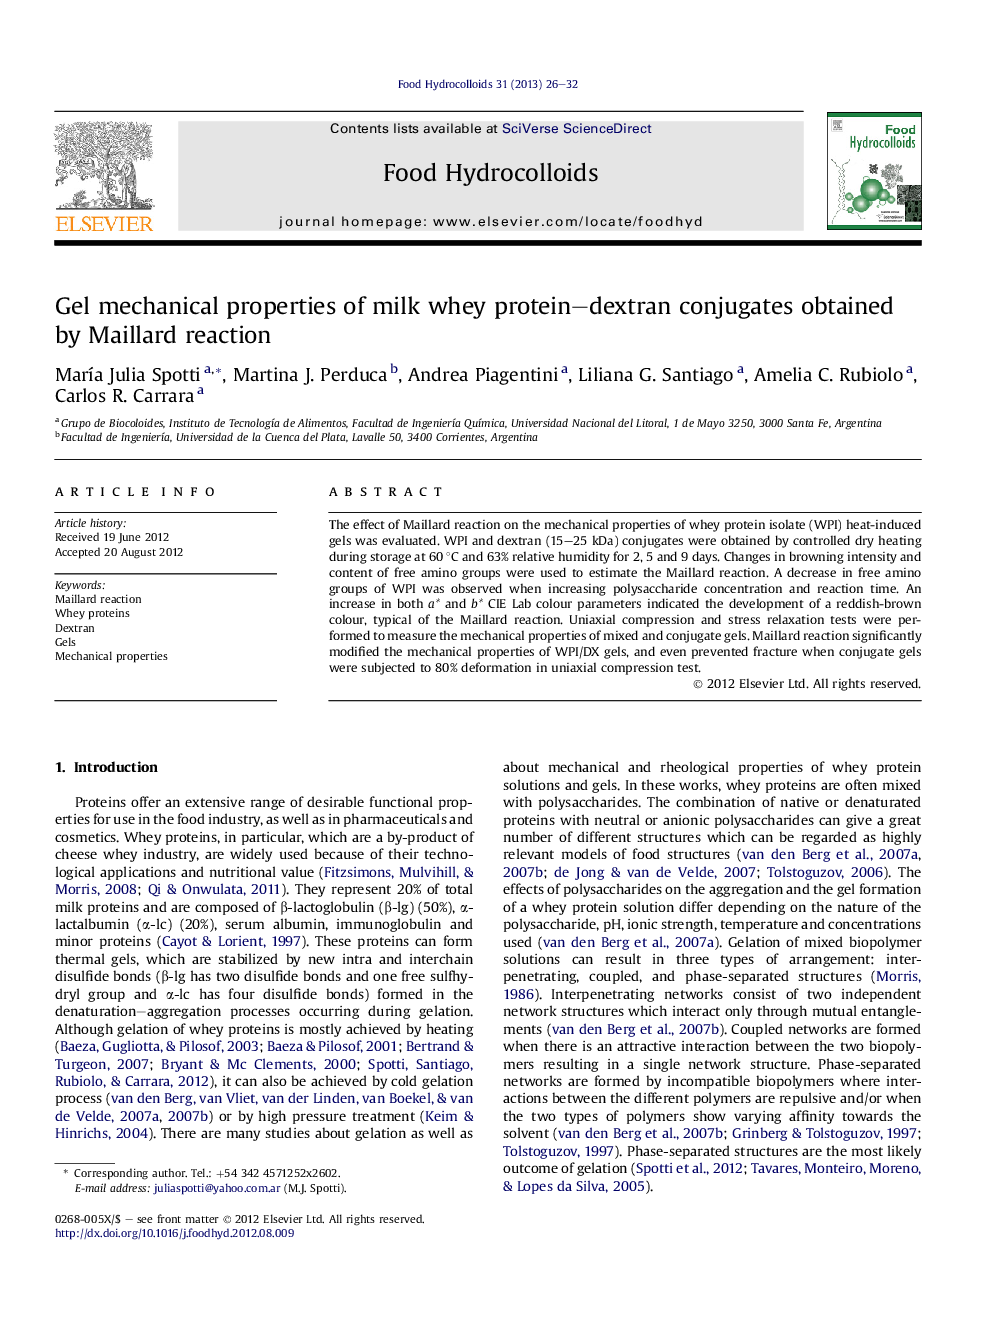 Gel mechanical properties of milk whey protein–dextran conjugates obtained by Maillard reaction